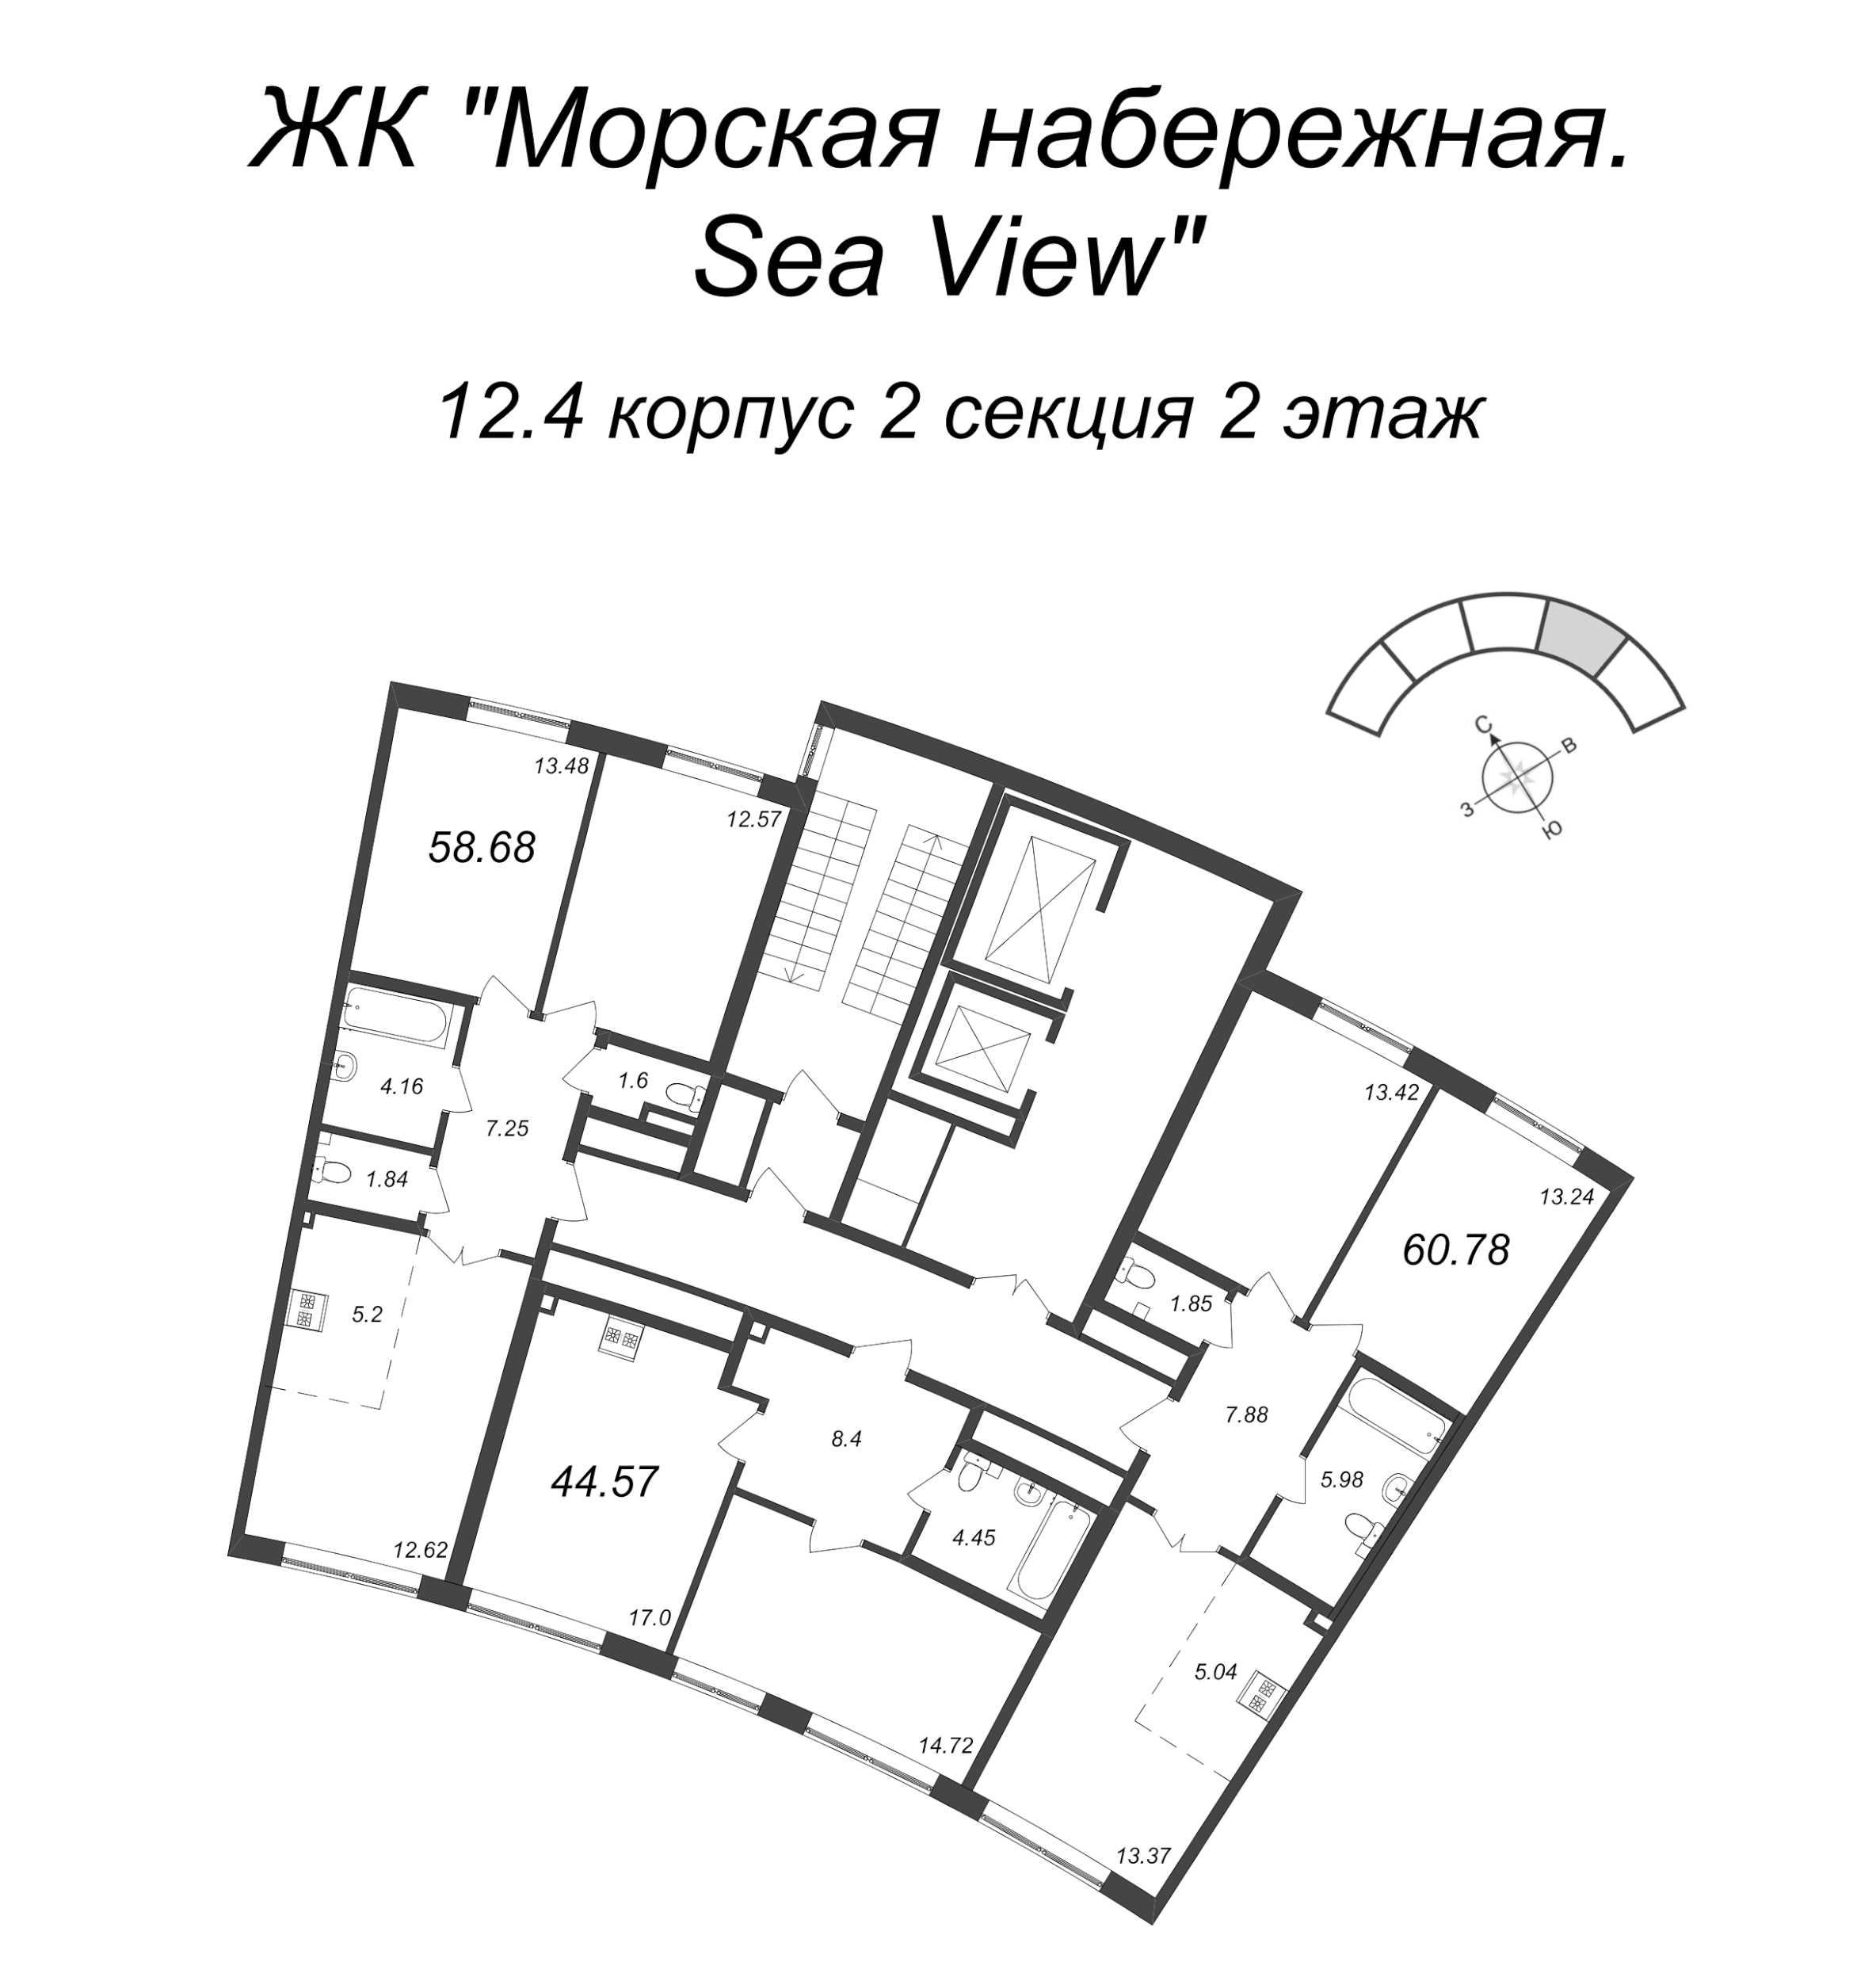 3-комнатная (Евро) квартира, 60.78 м² - планировка этажа